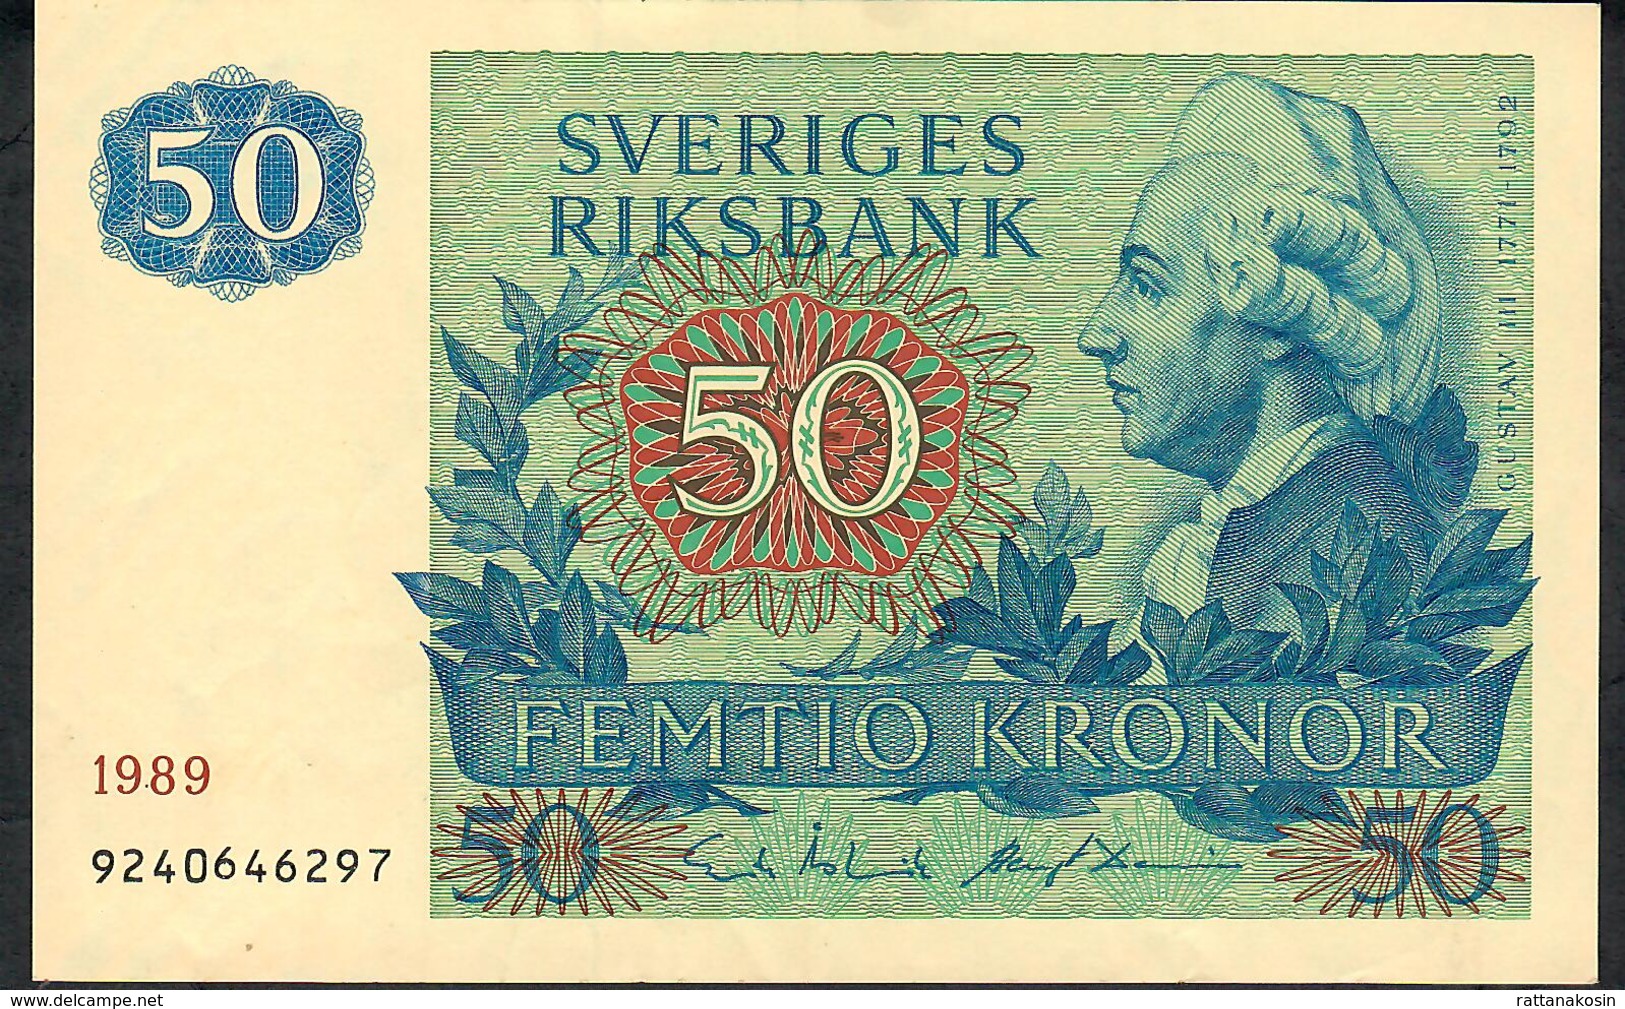 SWEDEN P53d 50 KRONOR 1989 #9240646297  XF - Svezia